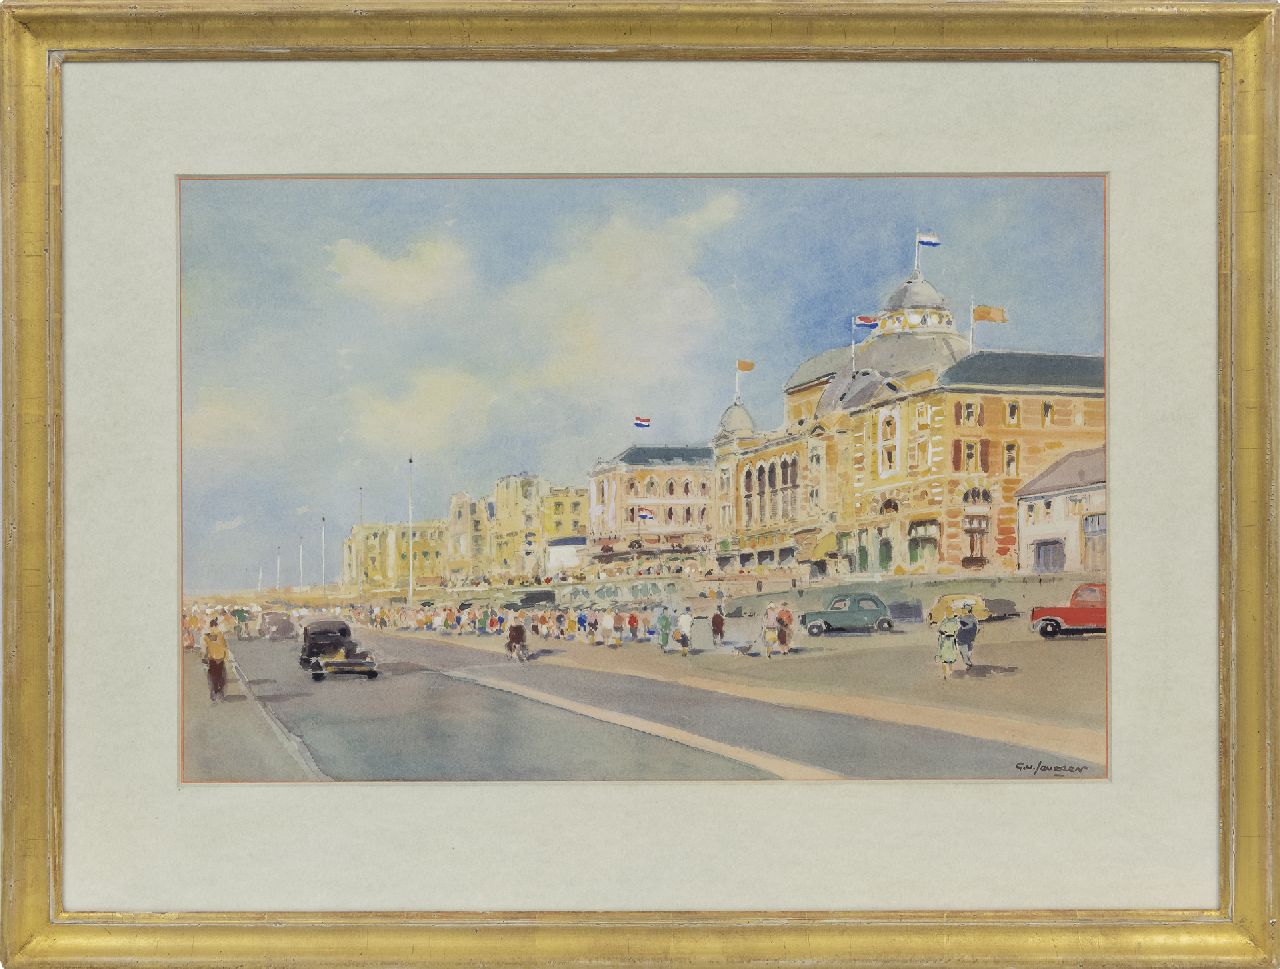 Jeveren G. van | Gerrit van Jeveren | Watercolours and drawings offered for sale | The promenade of Scheveningen, watercolour on paper 35.3 x 53.7 cm, signed l.r. and painted 1950s